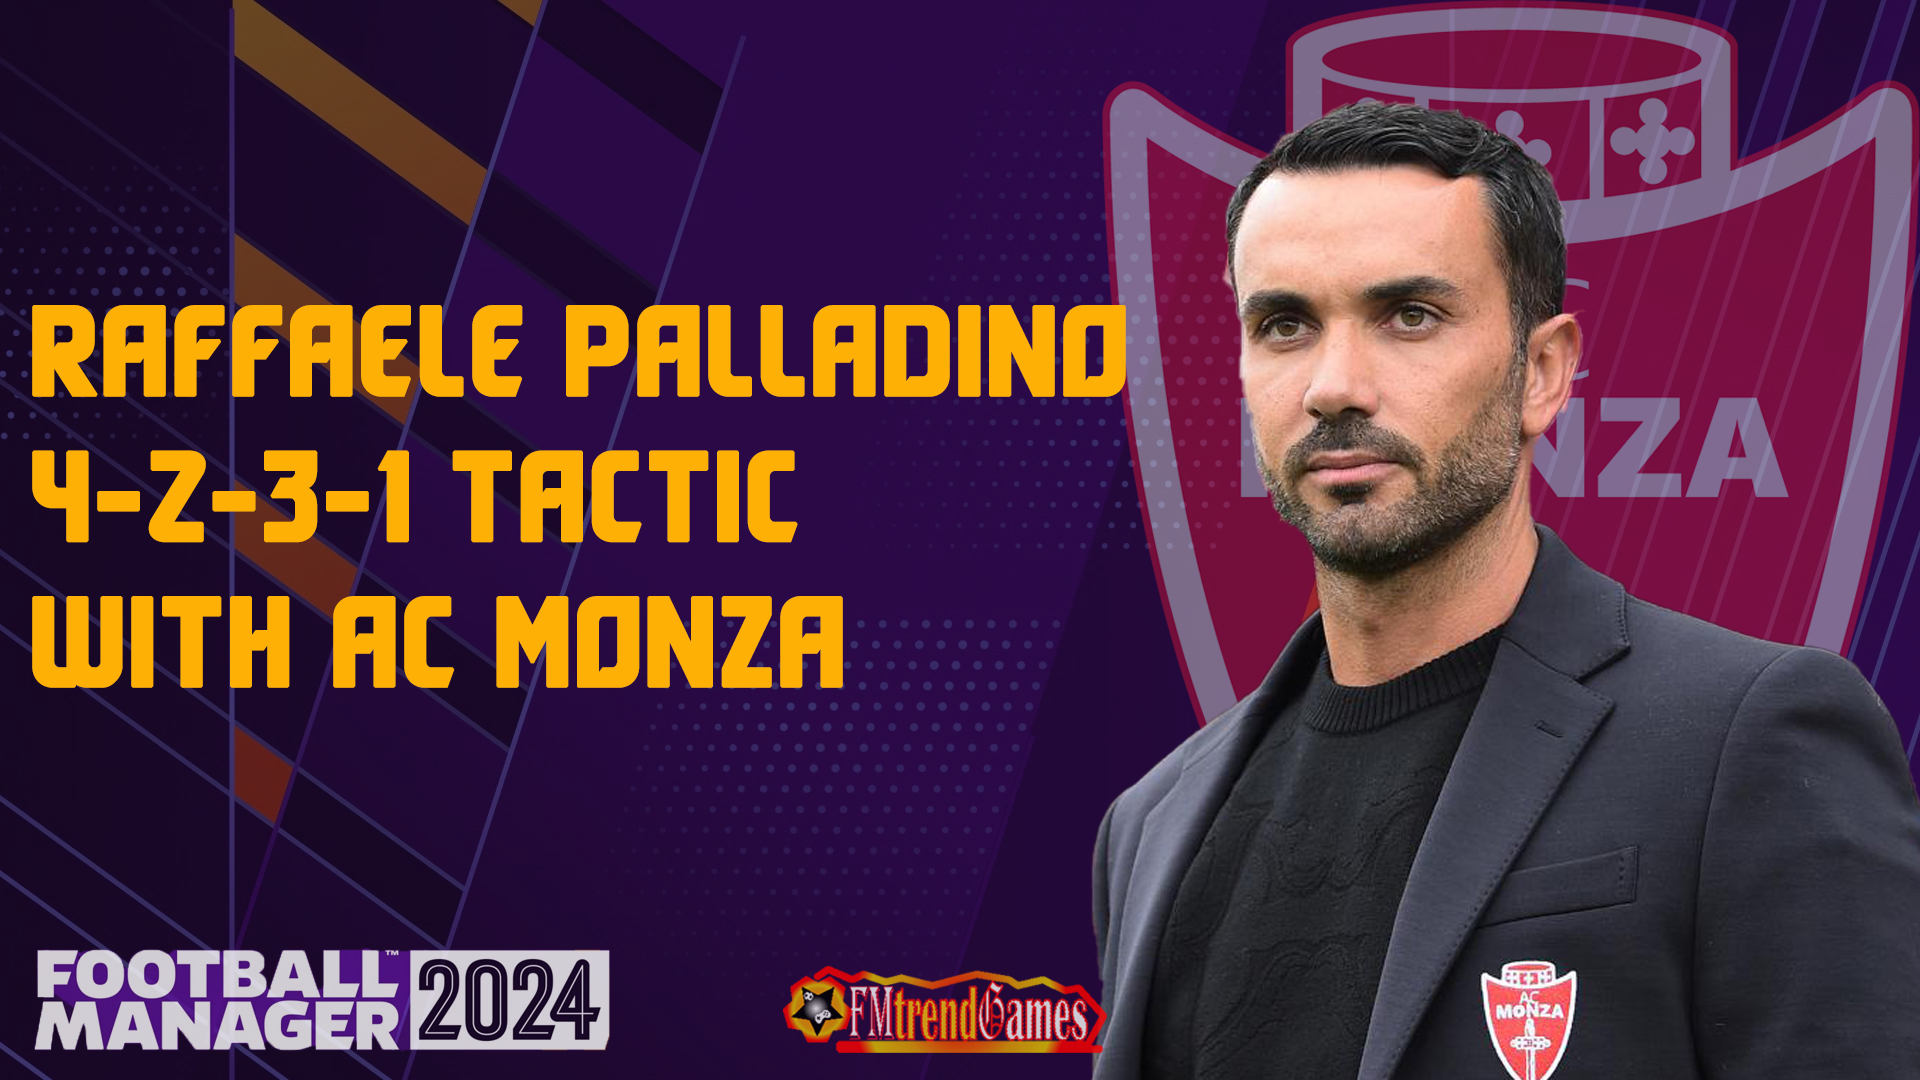 FM24 Raffaele Palladino 4-2-3-1 Tactic with AC Monza